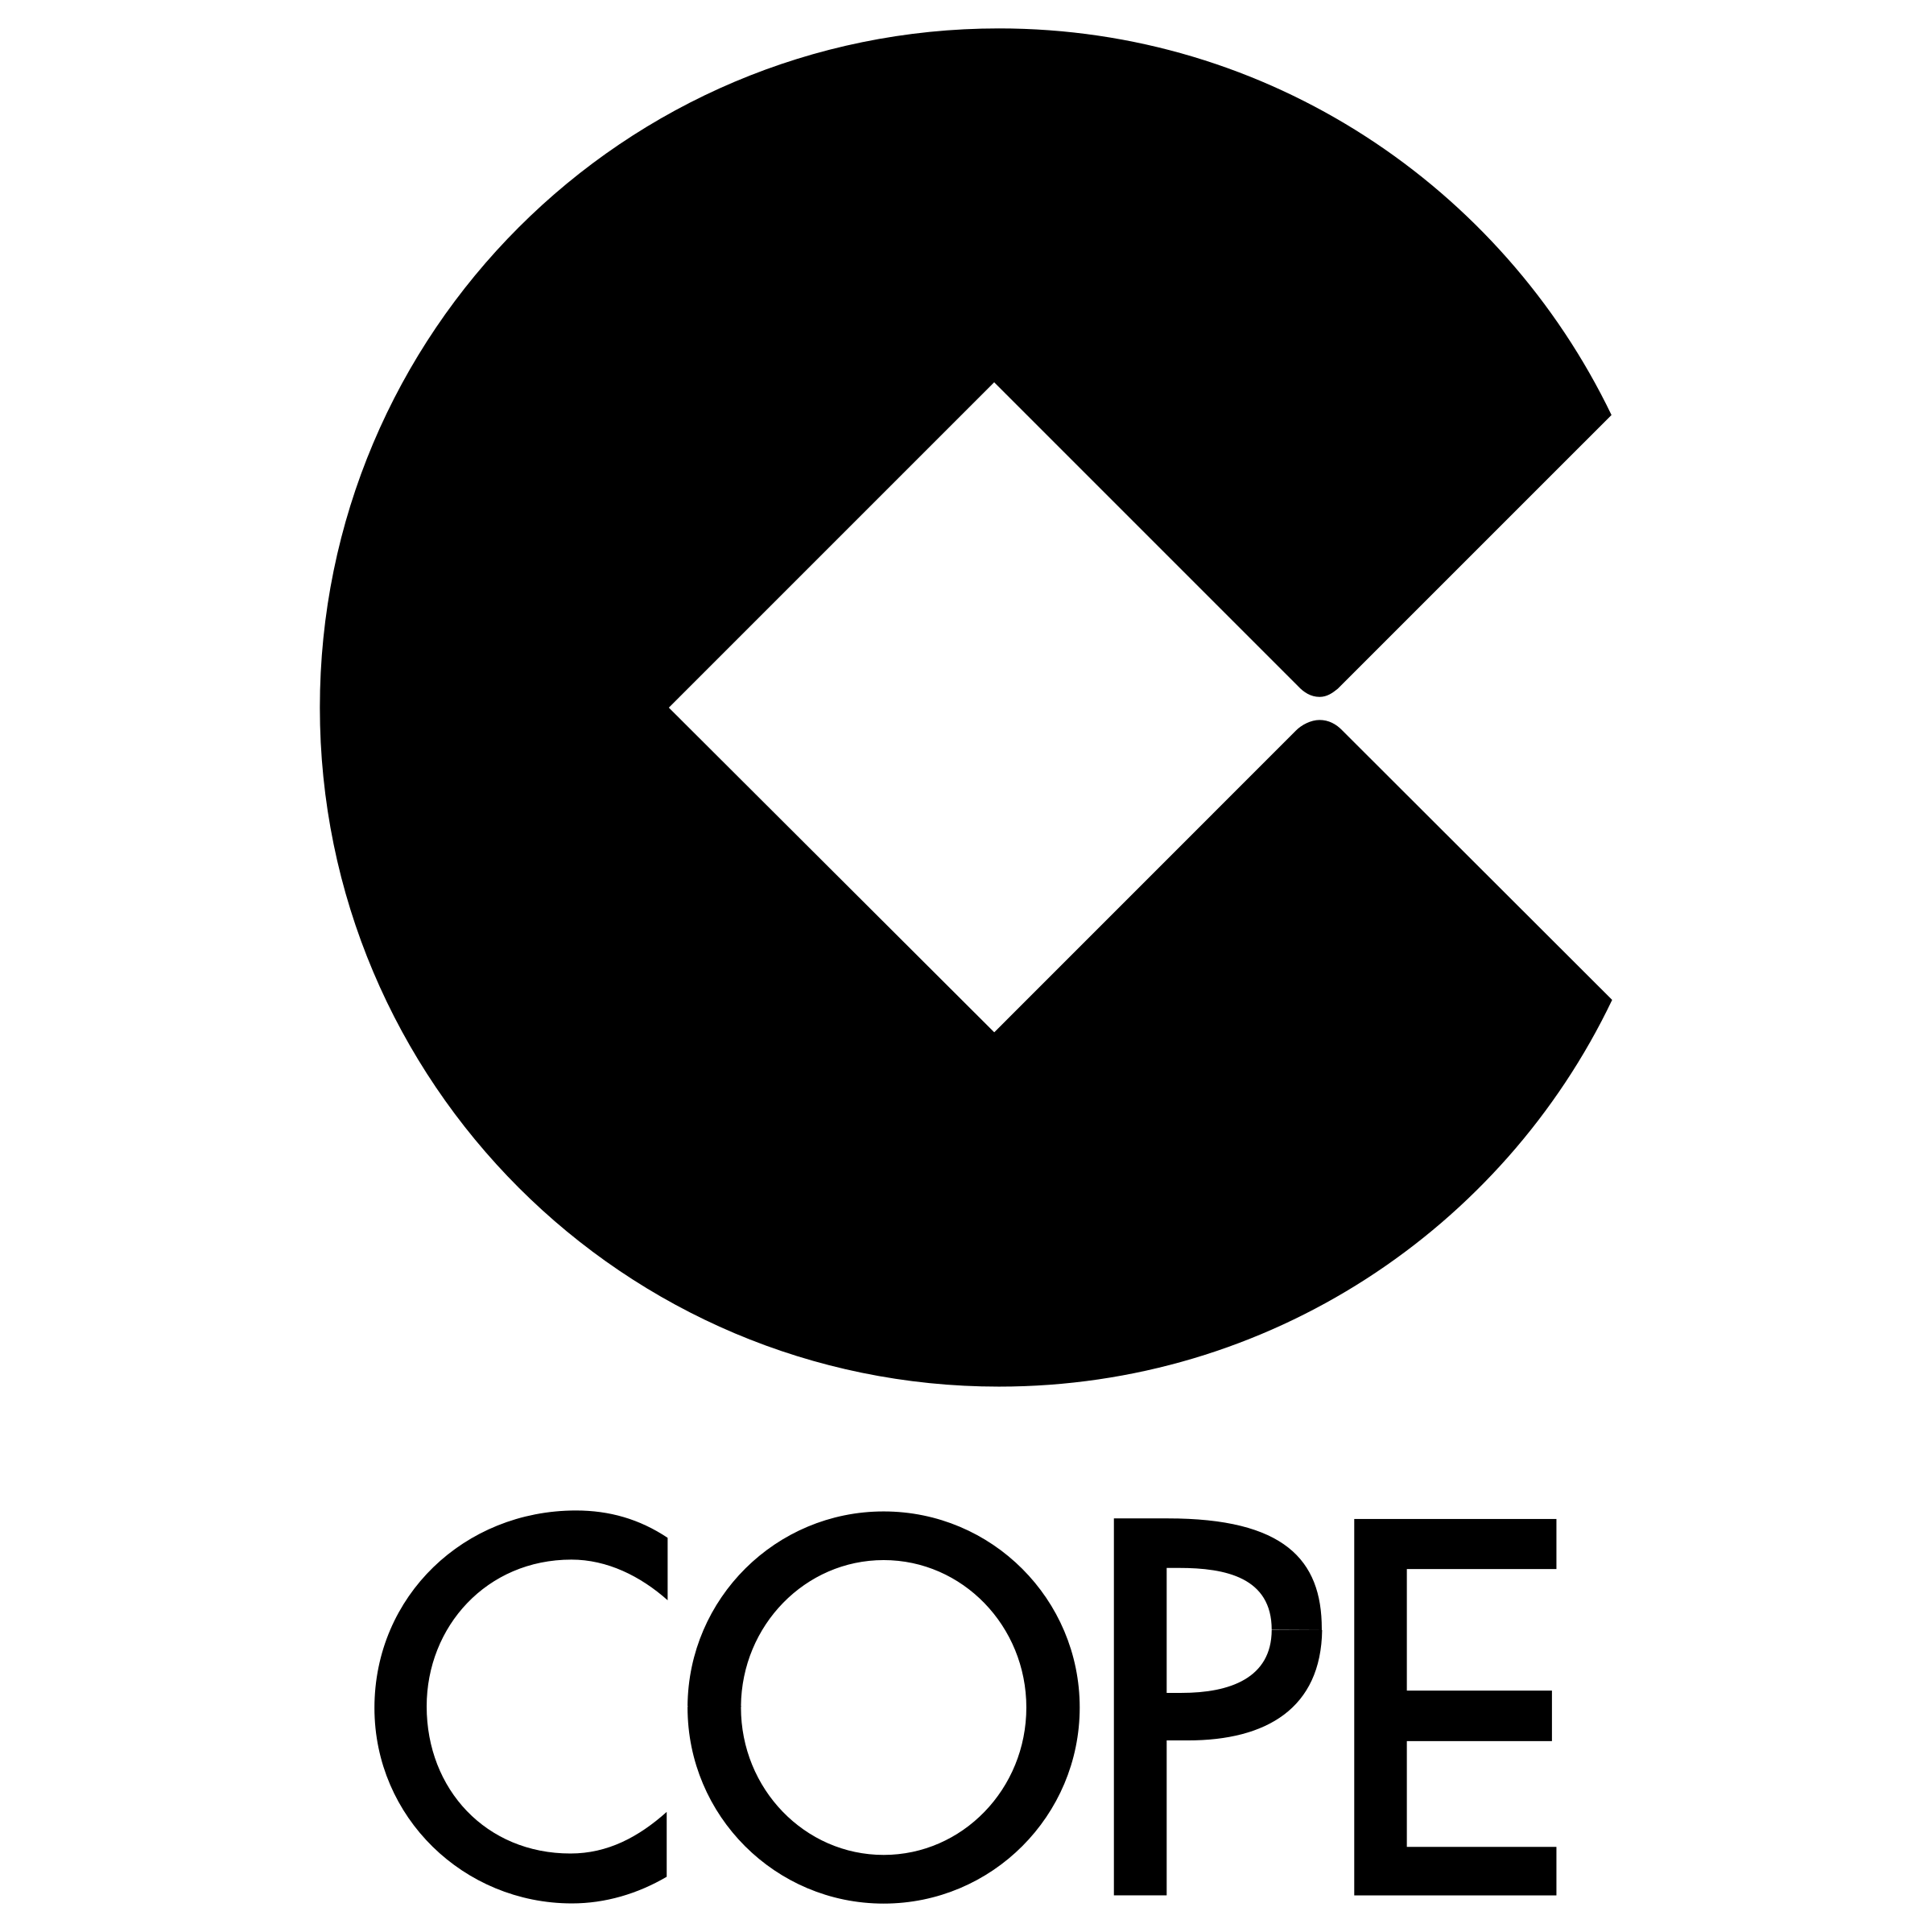 Cope Logo - Cope Logo PNG Transparent & SVG Vector - Freebie Supply